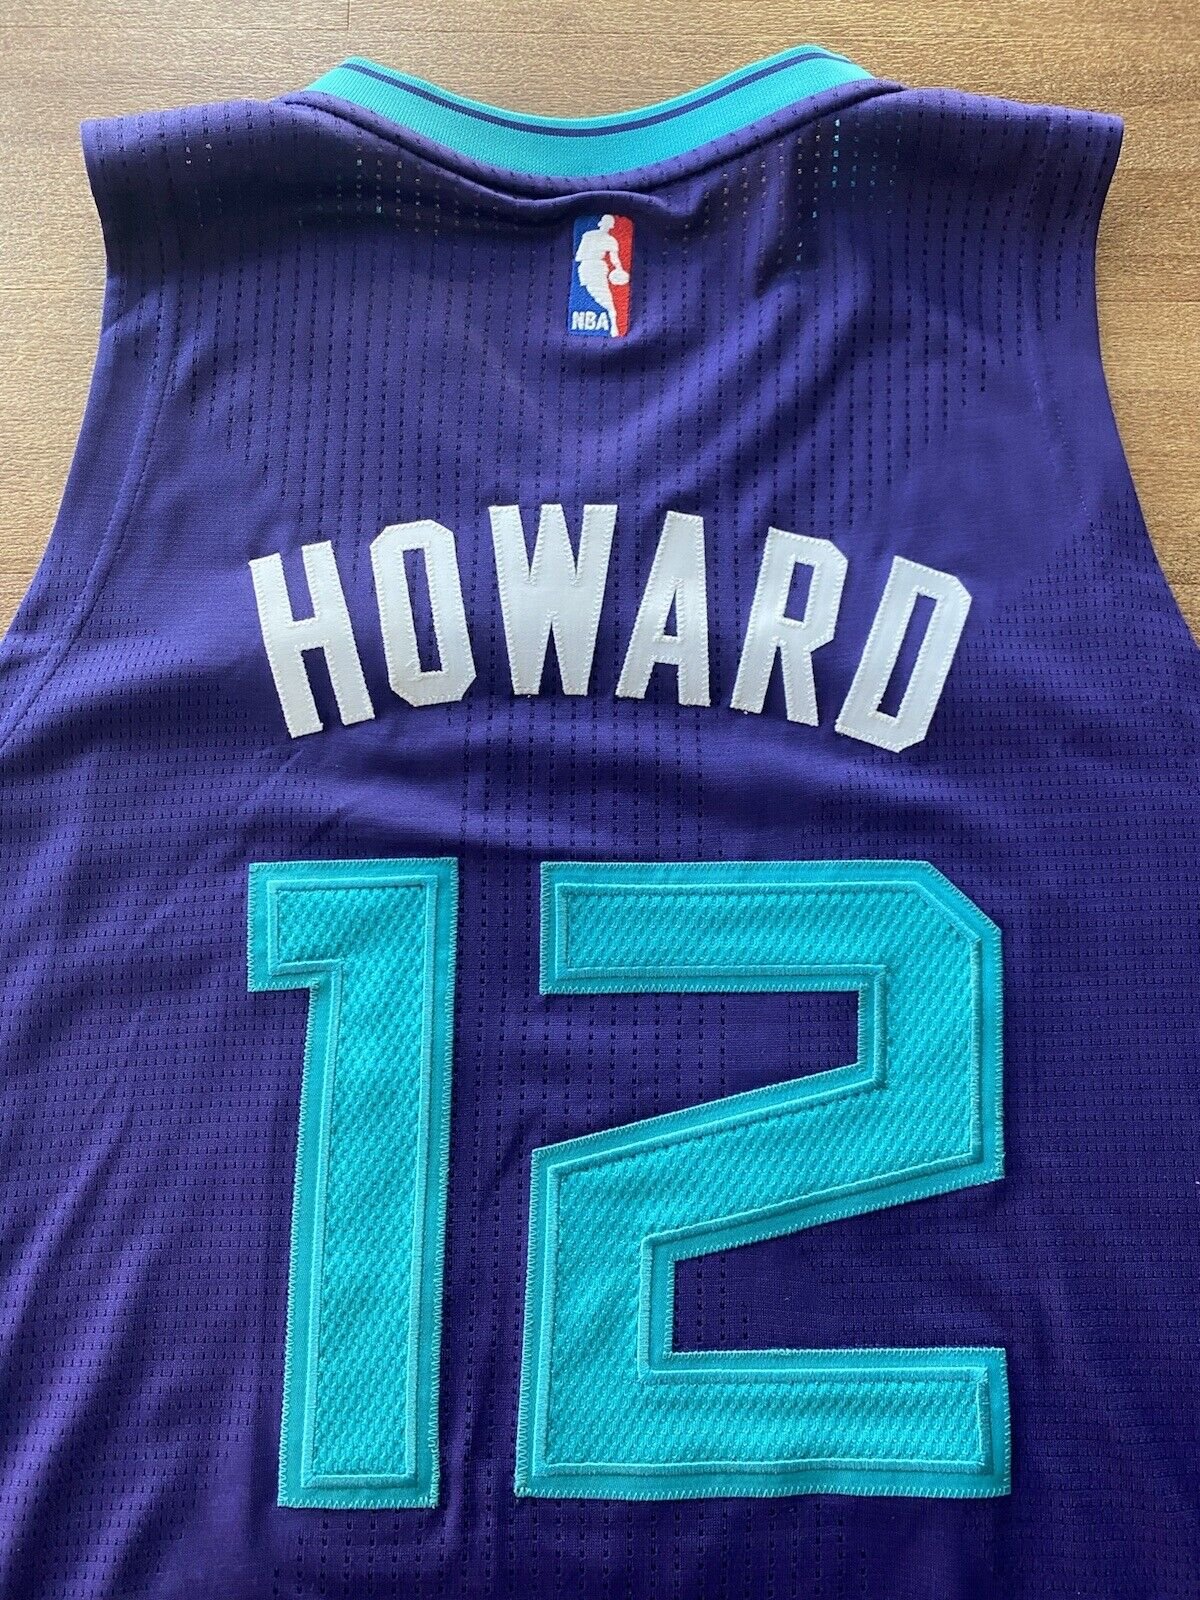 adidas Lakers Jersey howard 12 mens Size L 